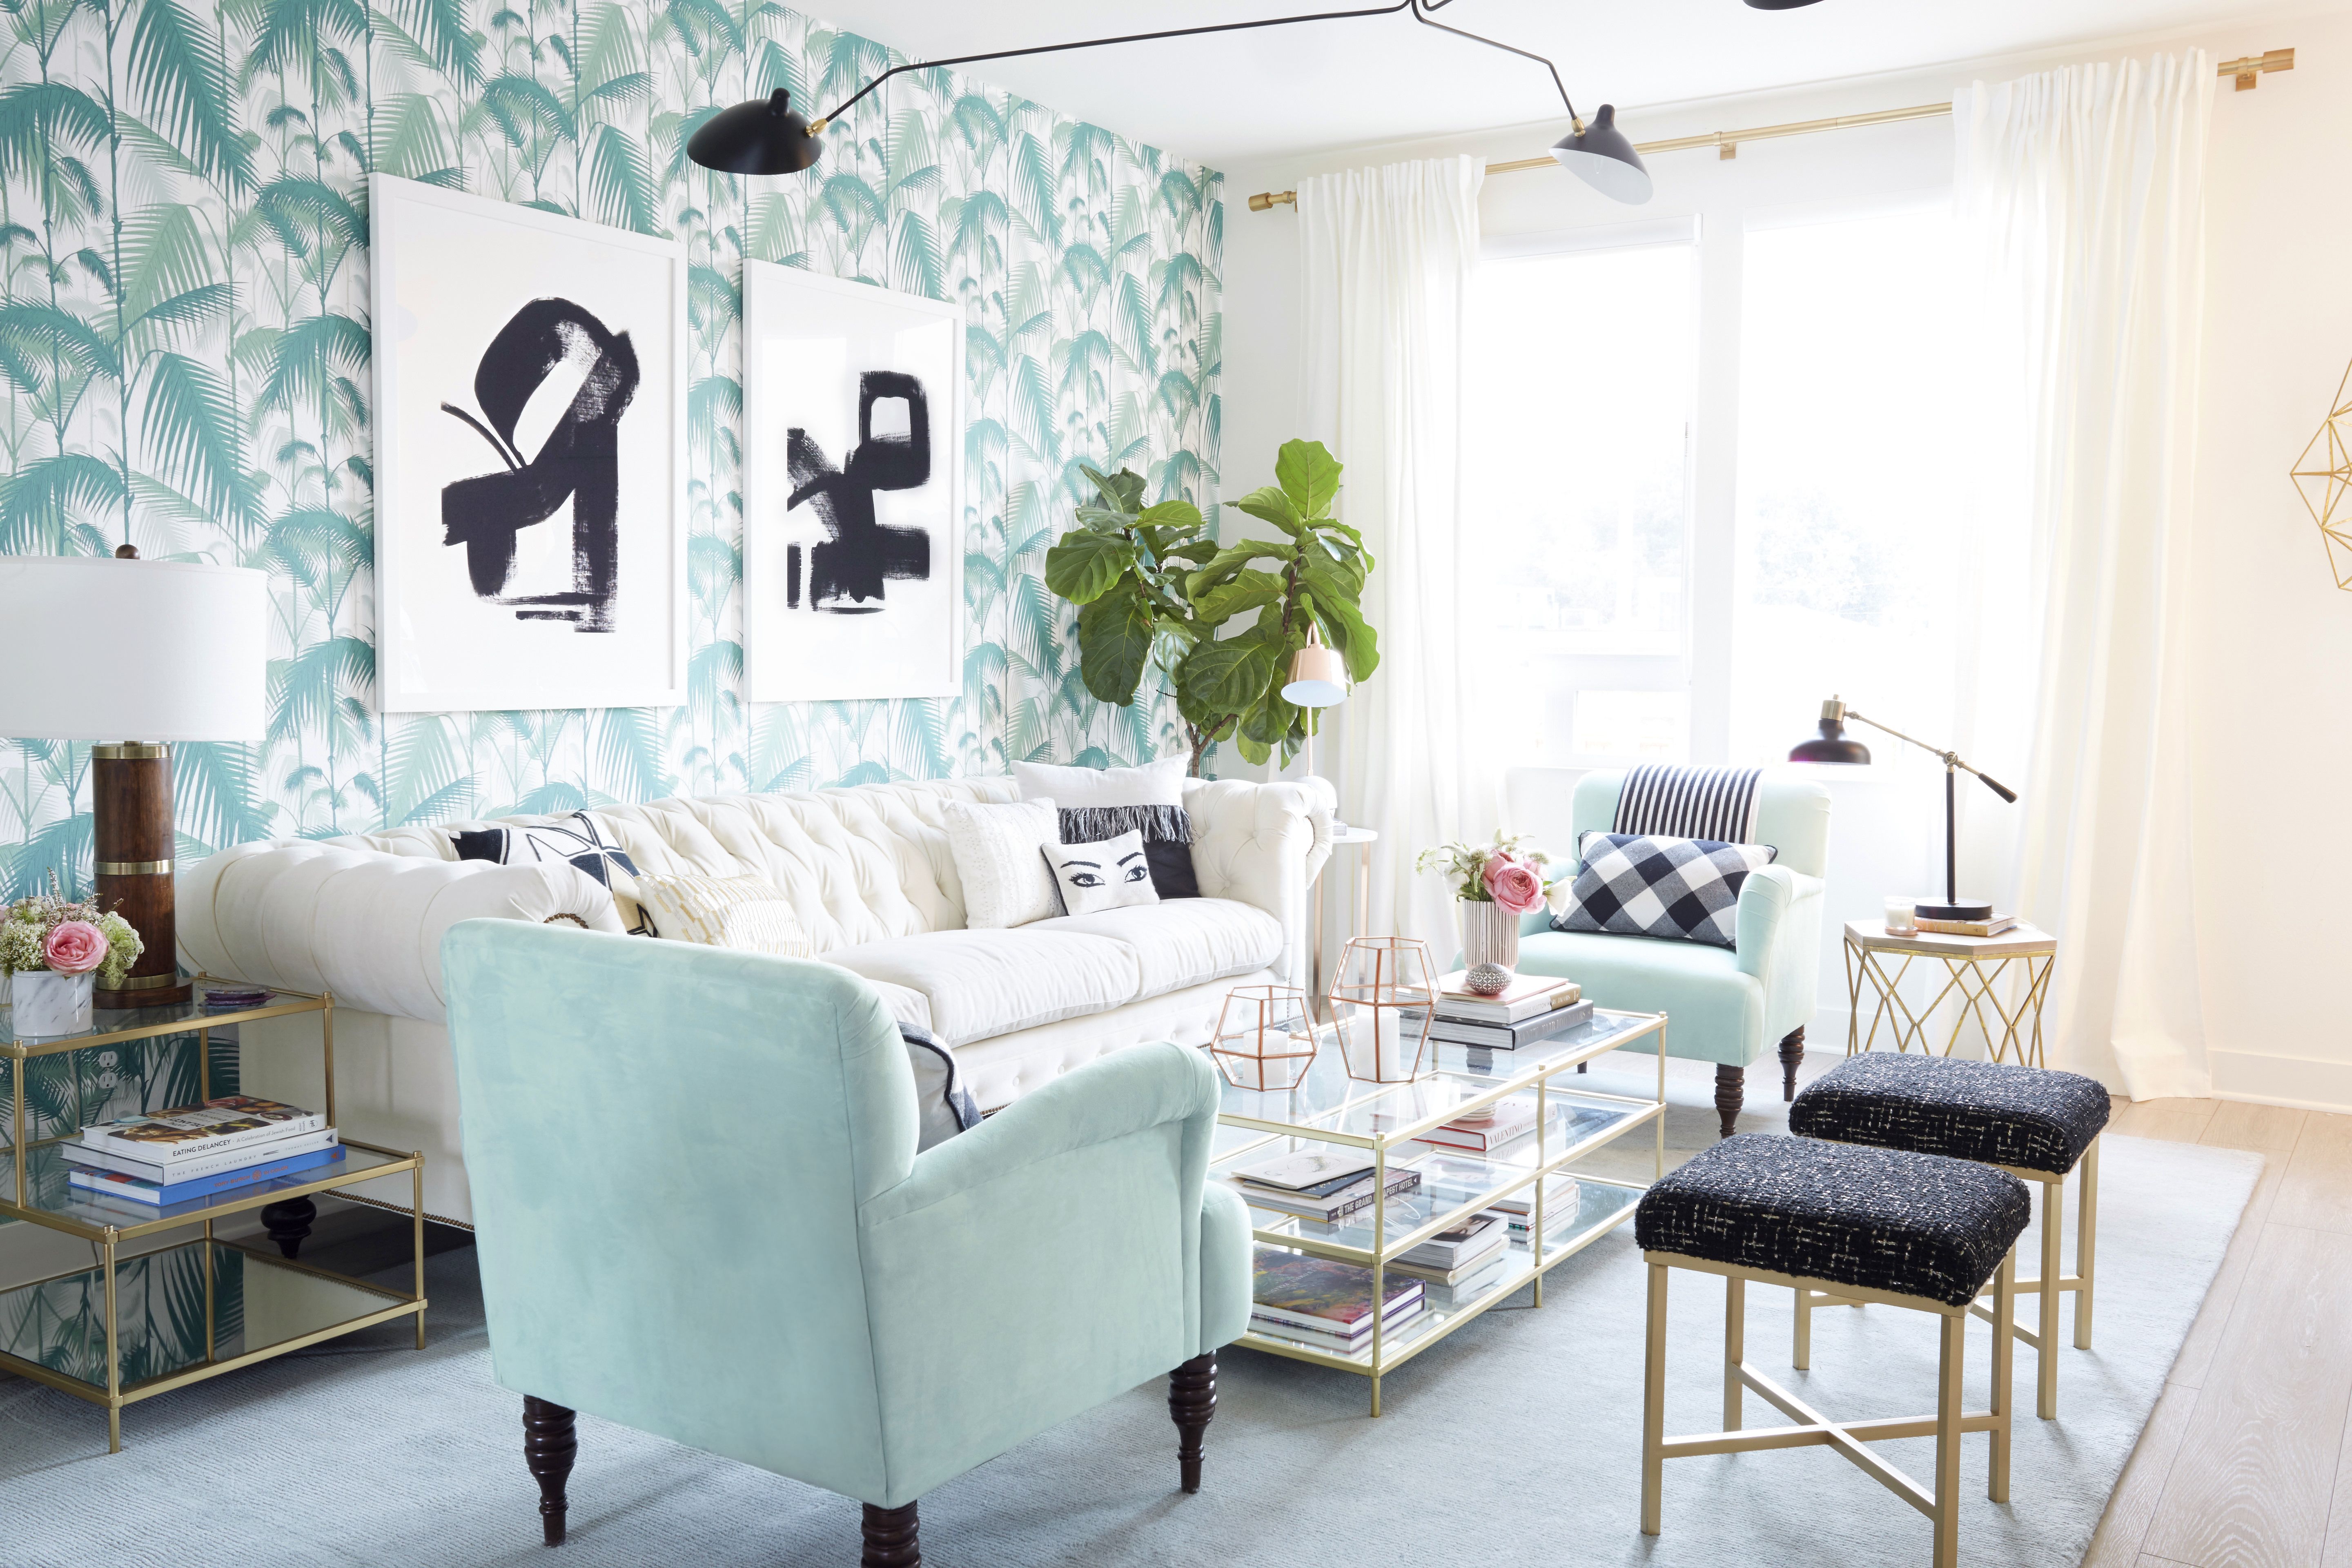 Louis Vuitton Wall  Cute room decor, Pinterest room decor, Small bedroom  inspiration